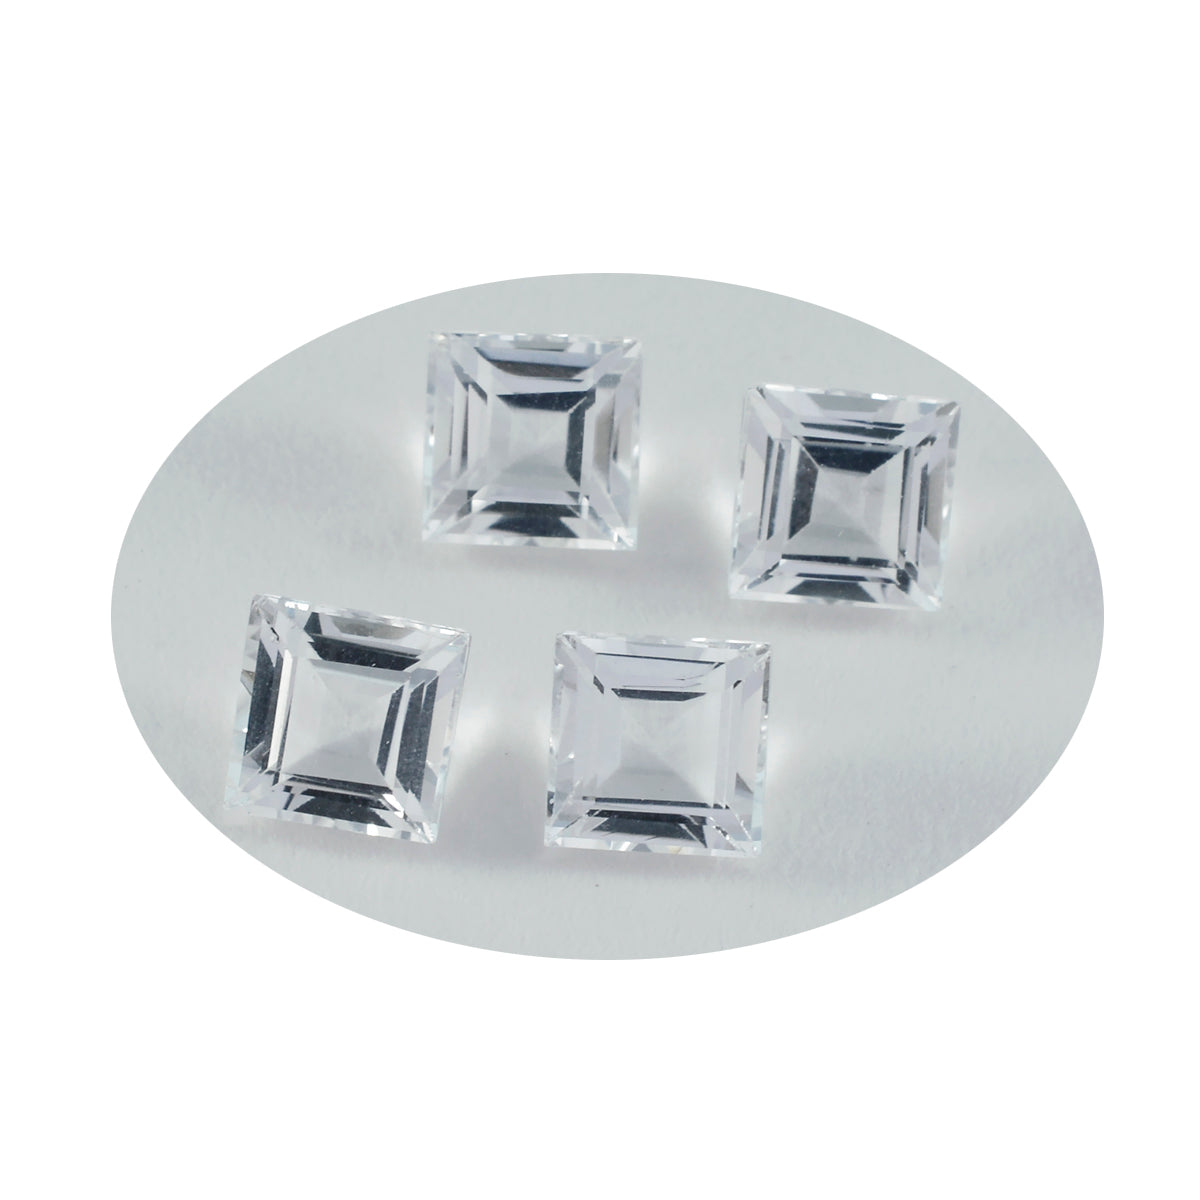 Riyogems 1PC White Crystal Quartz Faceted 9x9 mm Square Shape excellent Quality Gems